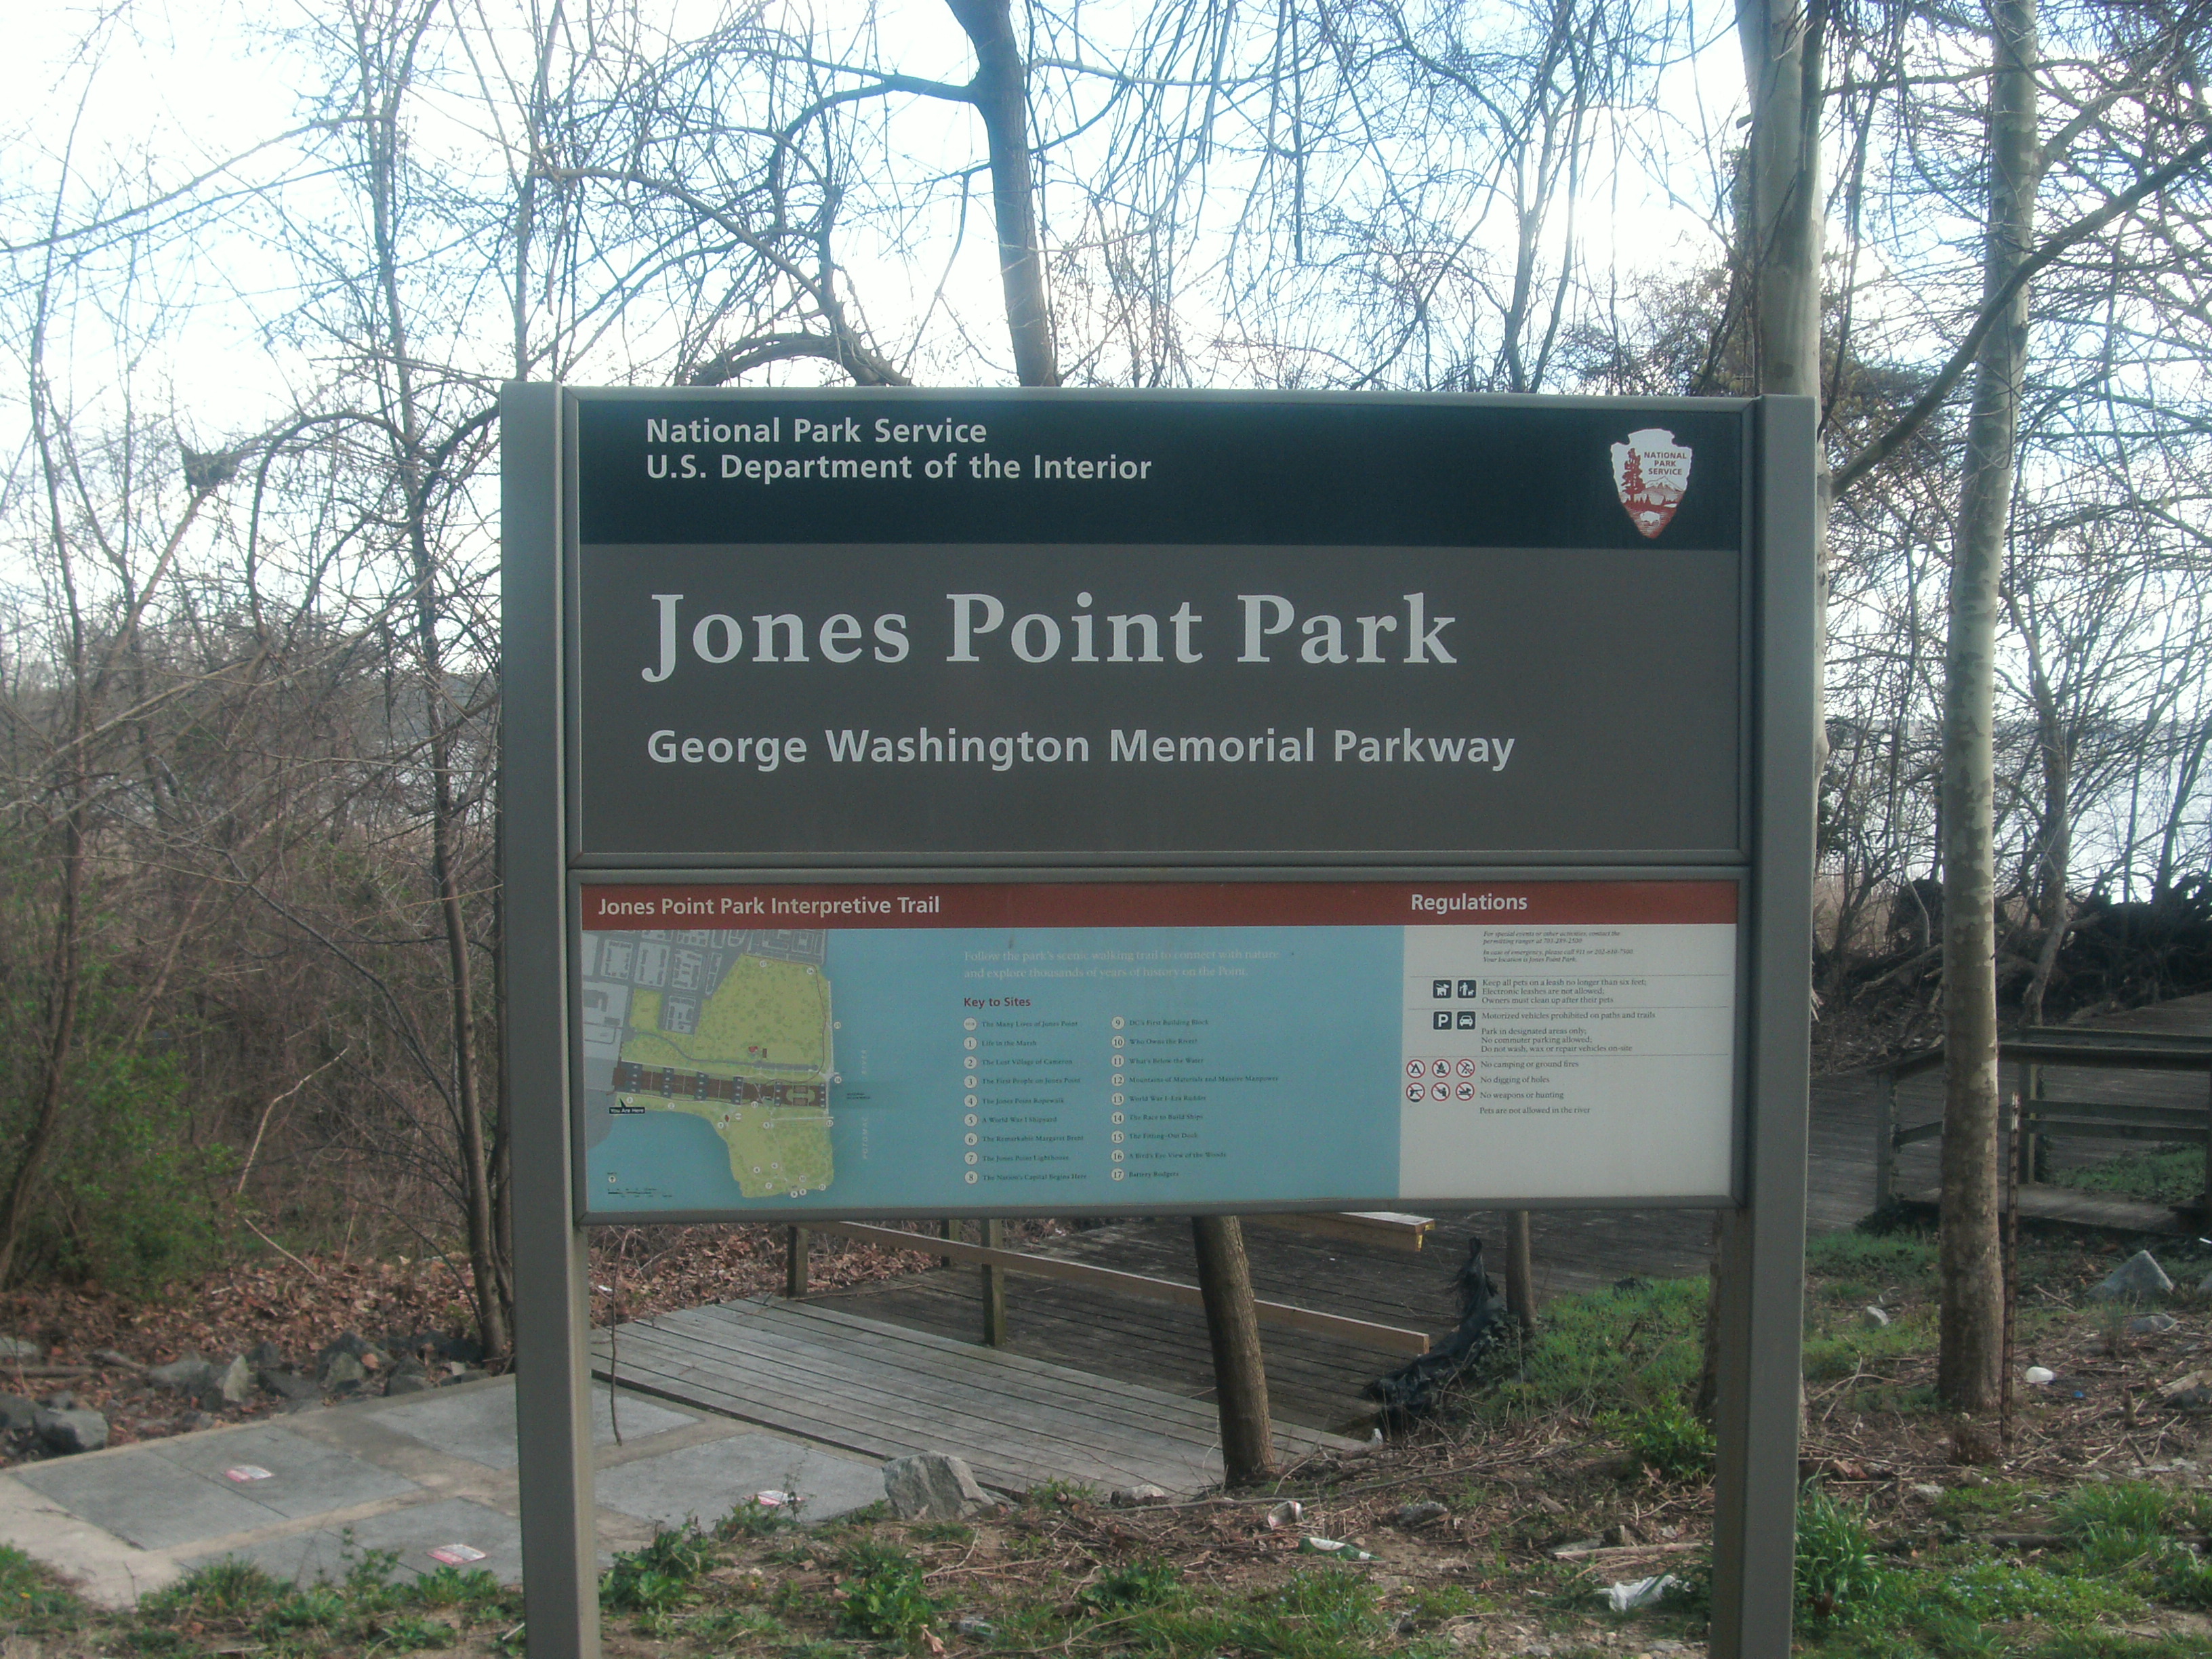 Jones Point Park